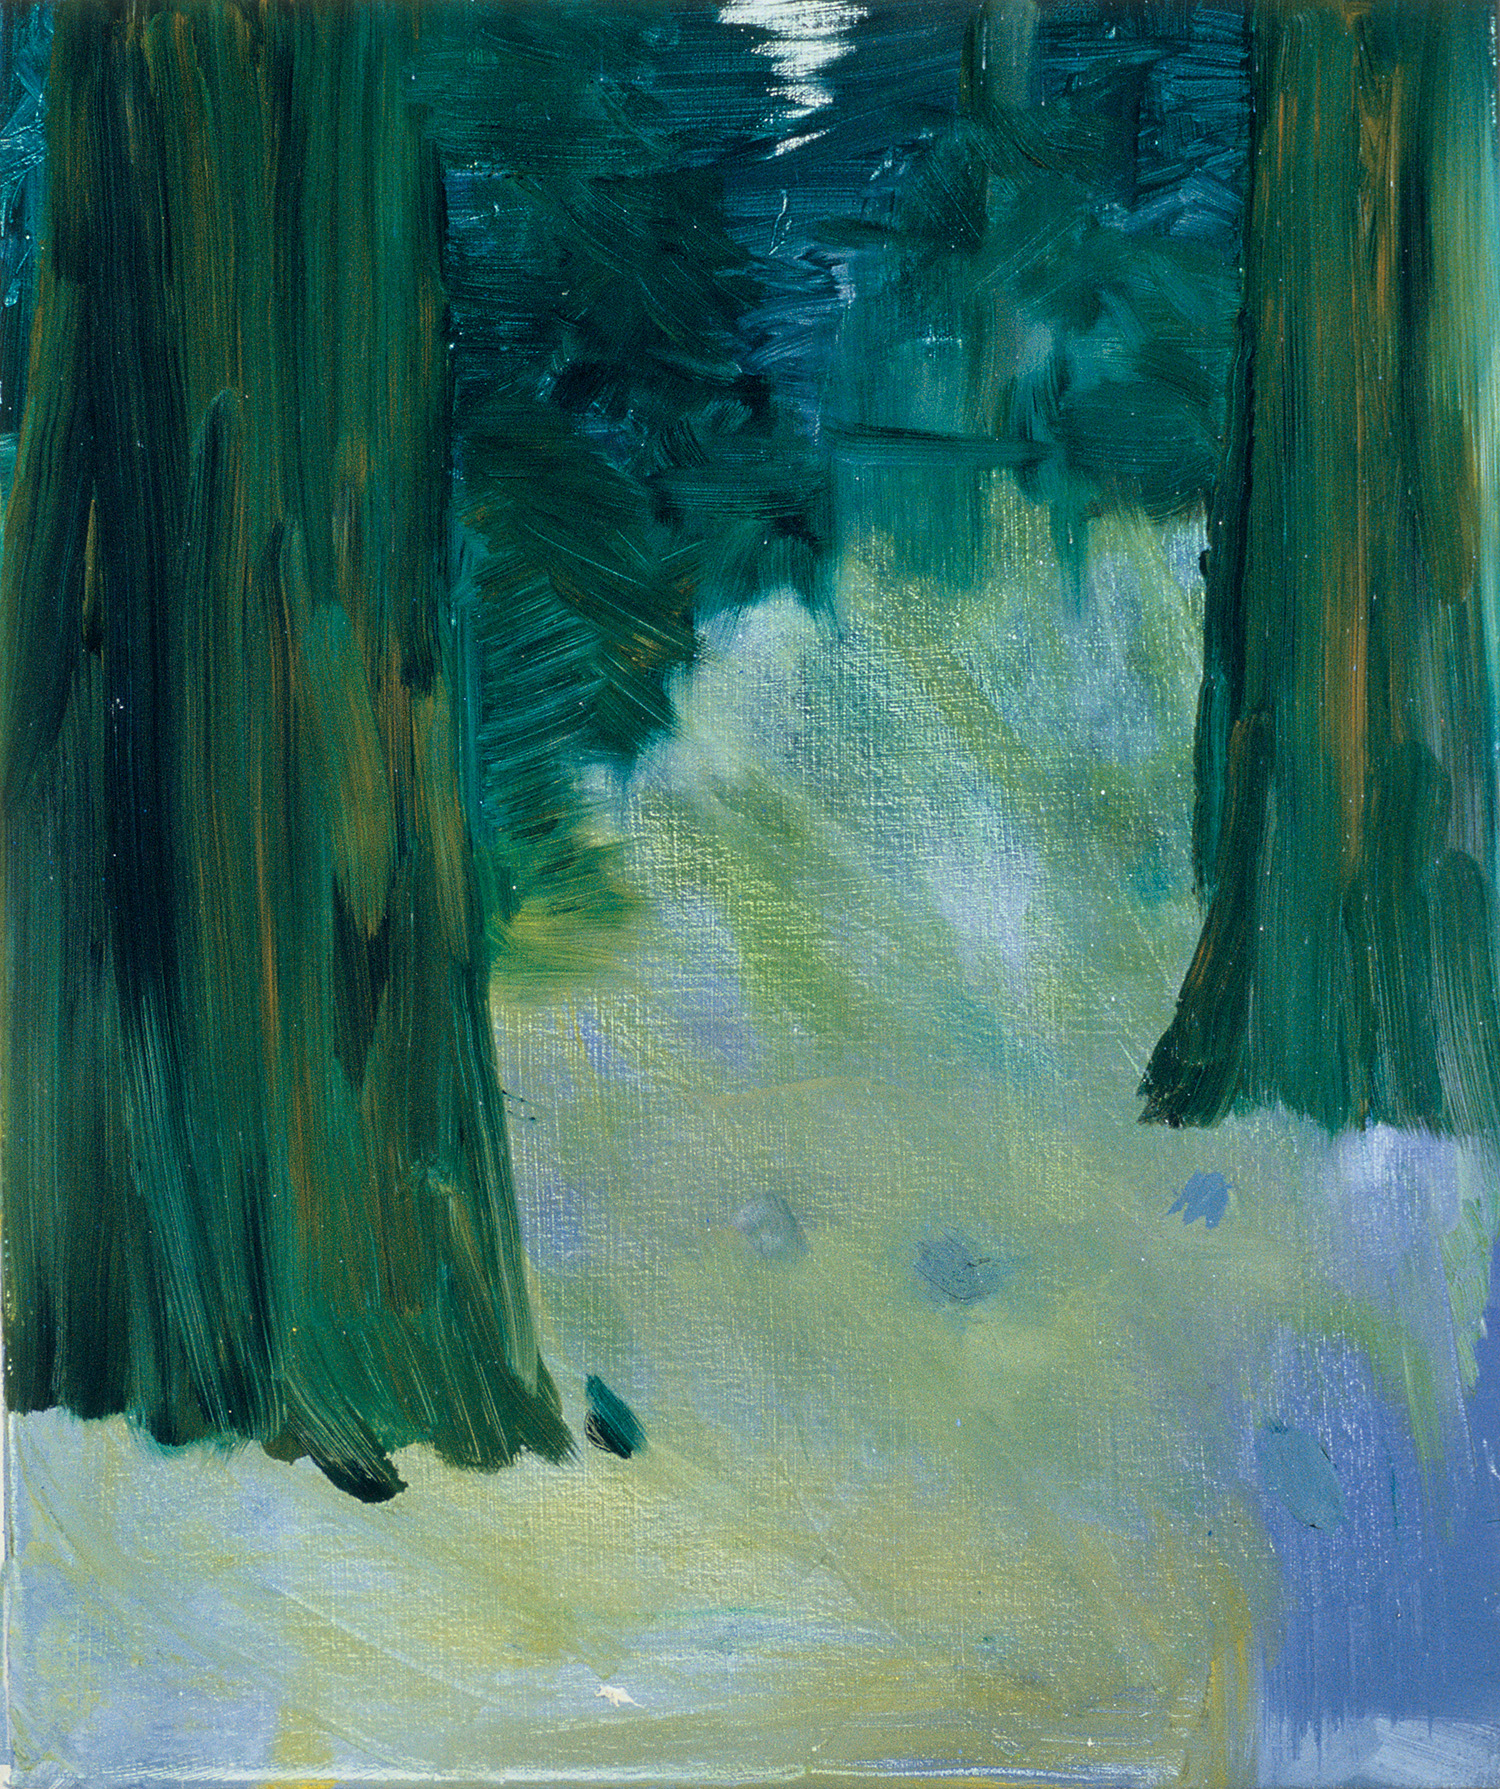   Rob Bear , 2005, oil on canvas, 16 x 12 inches 